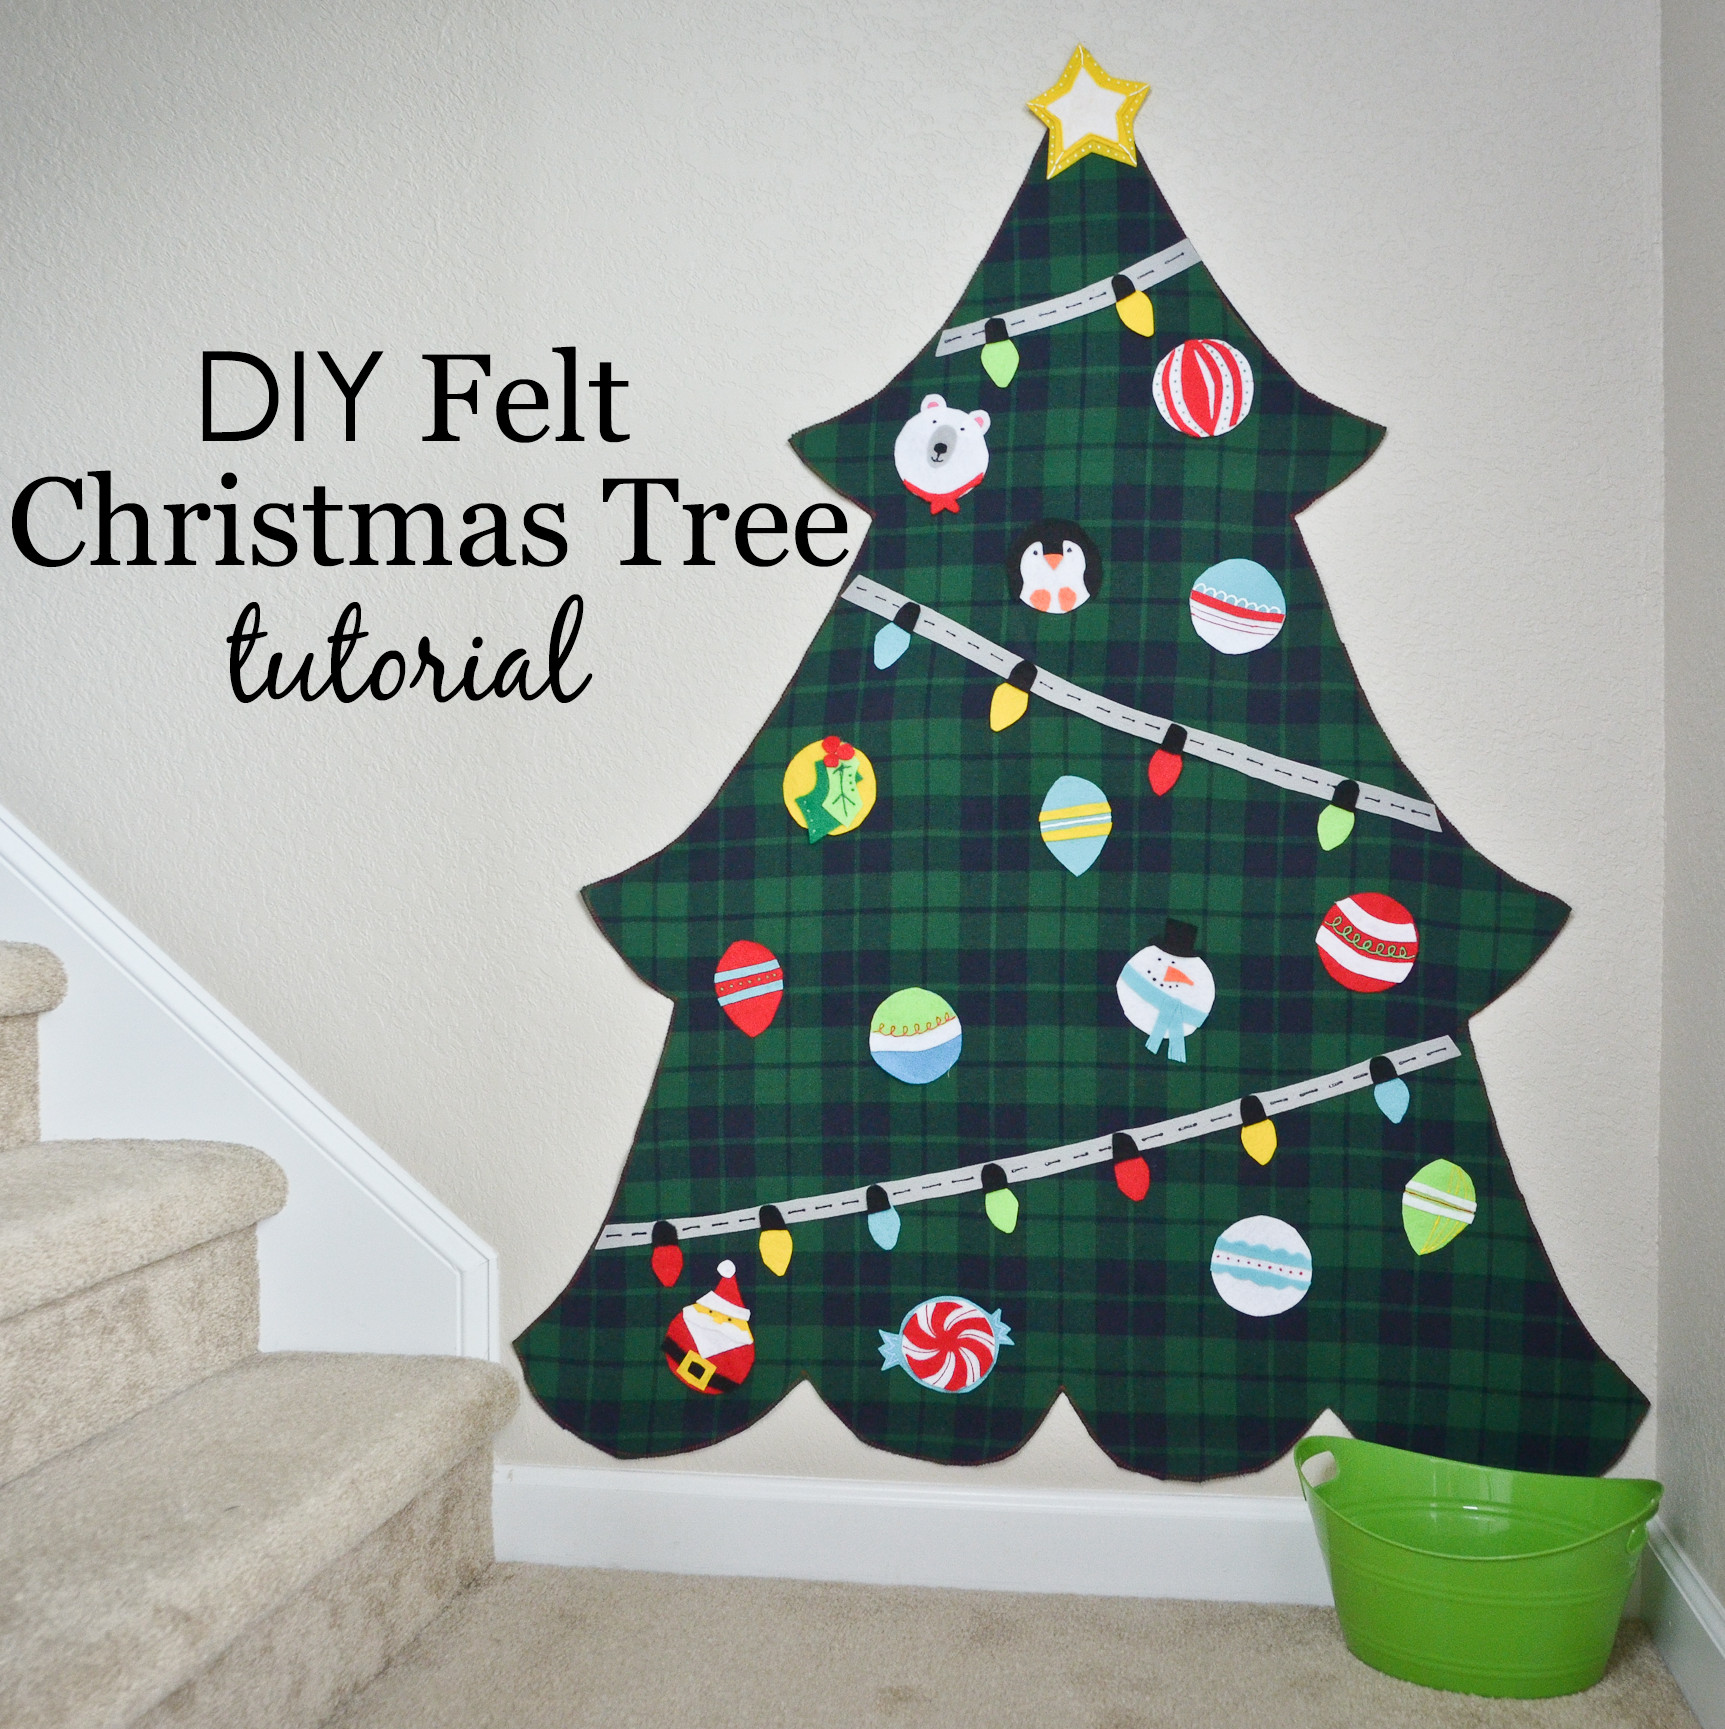 Best ideas about DIY Felt Christmas Tree
. Save or Pin DIY Felt Christmas Tree Project Nursery Now.